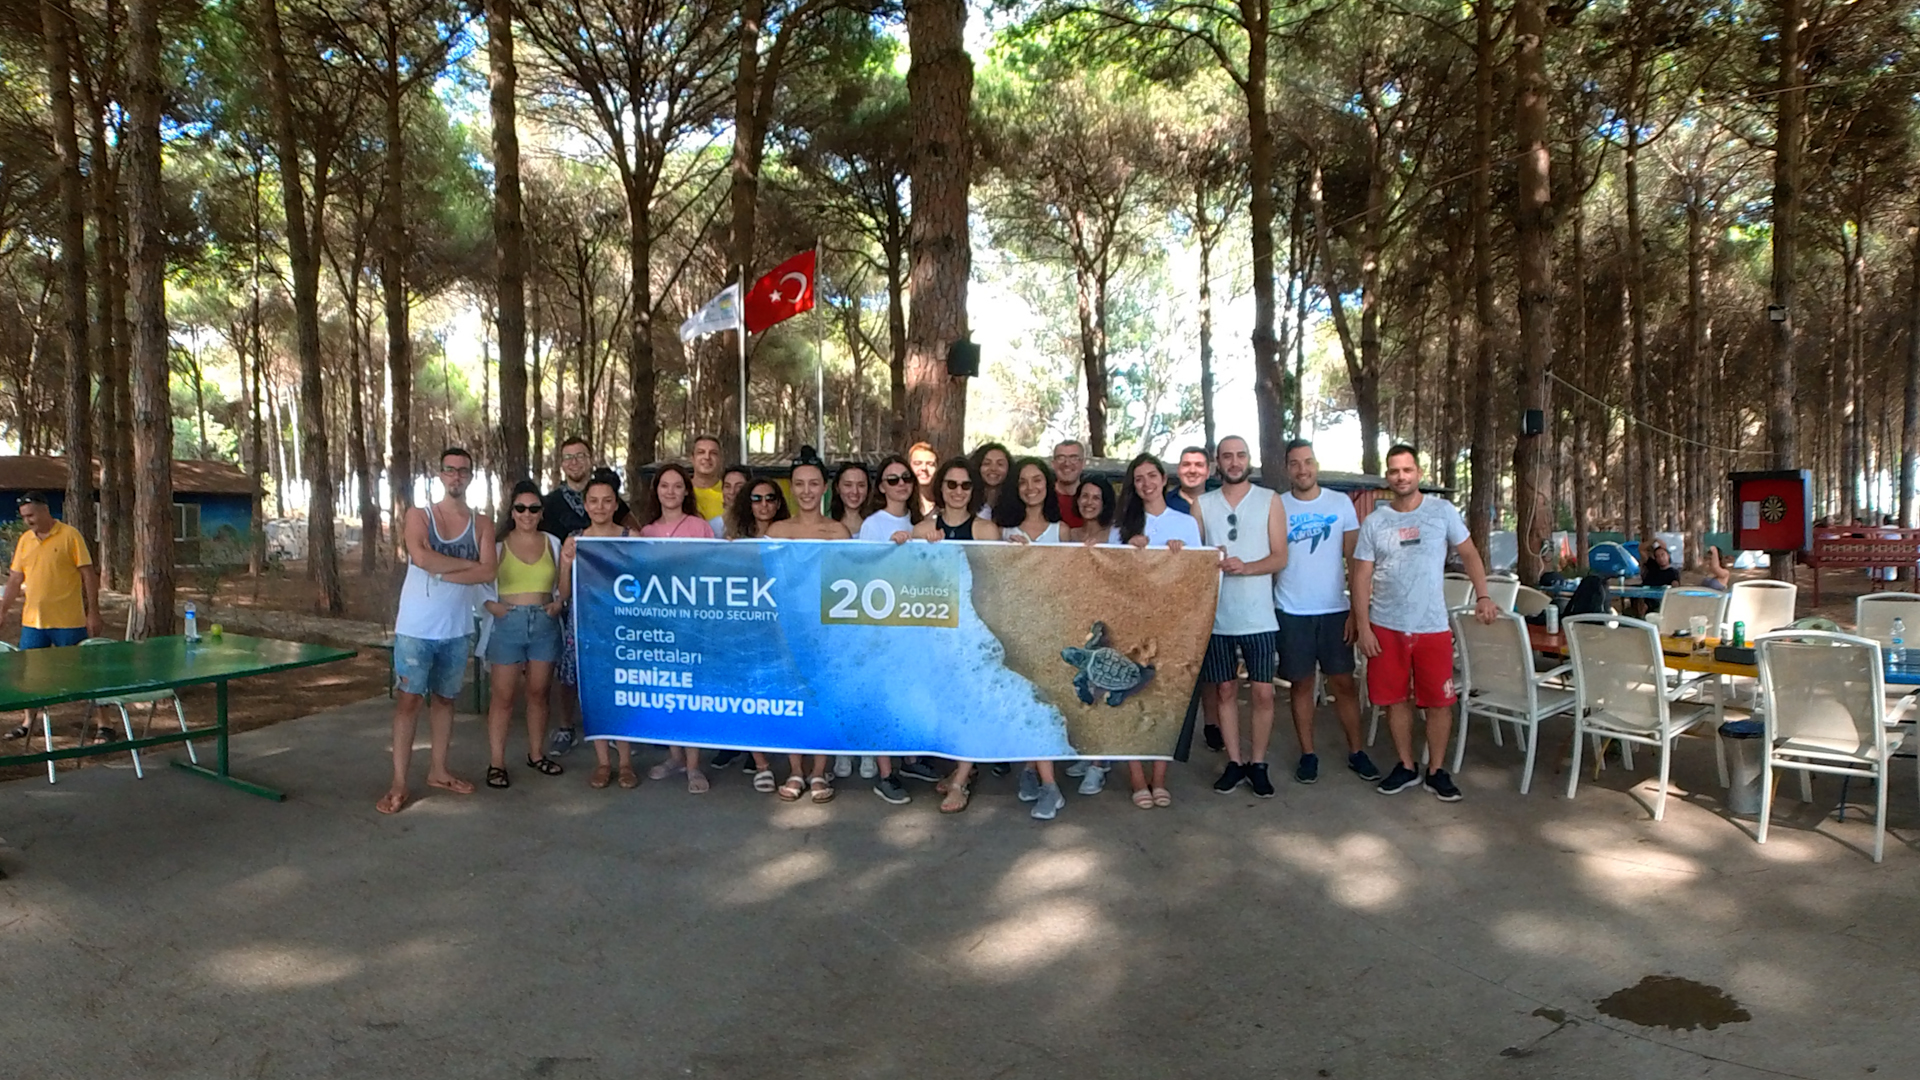 Cantek Group